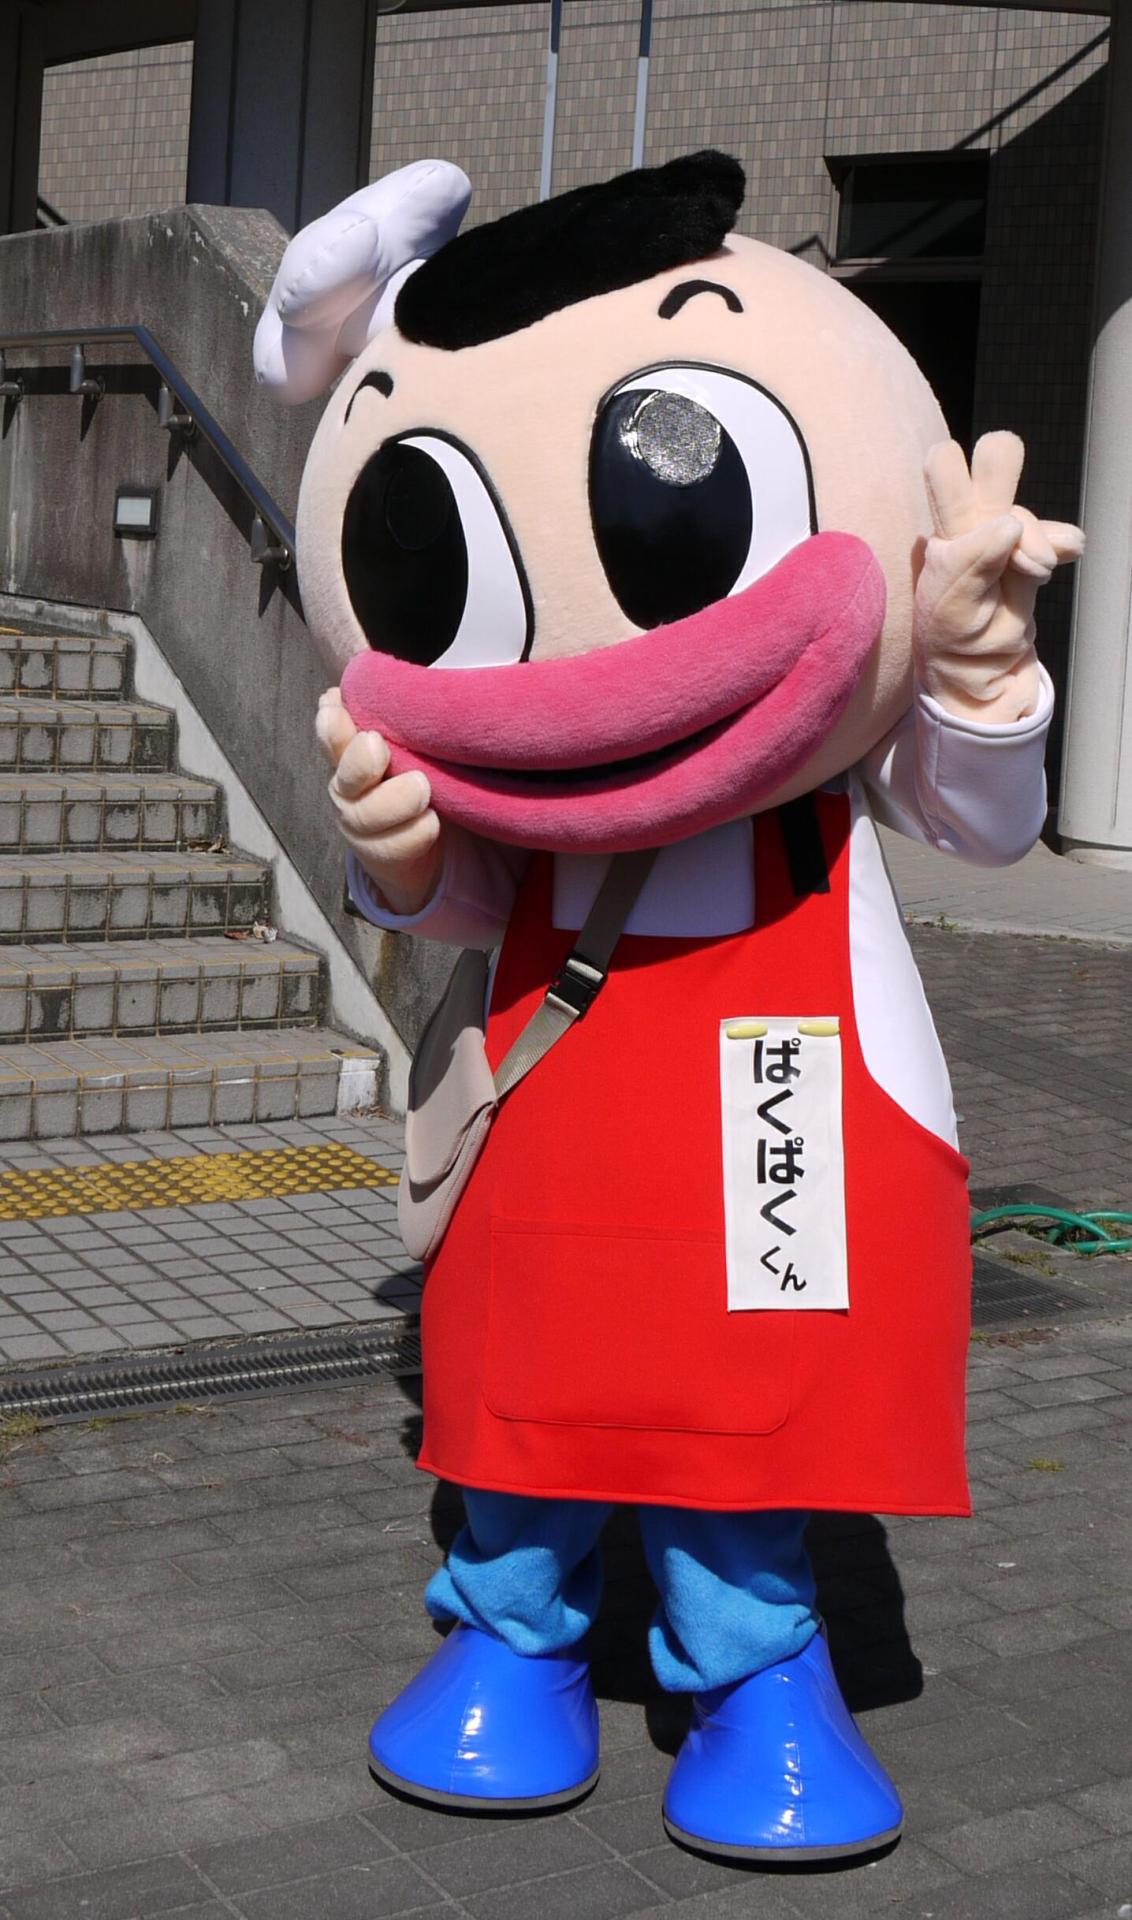 Japanese Mascot Photograph Yuruchara Jp 生活協同組合 コープしが のキャラクター ぱくぱく君